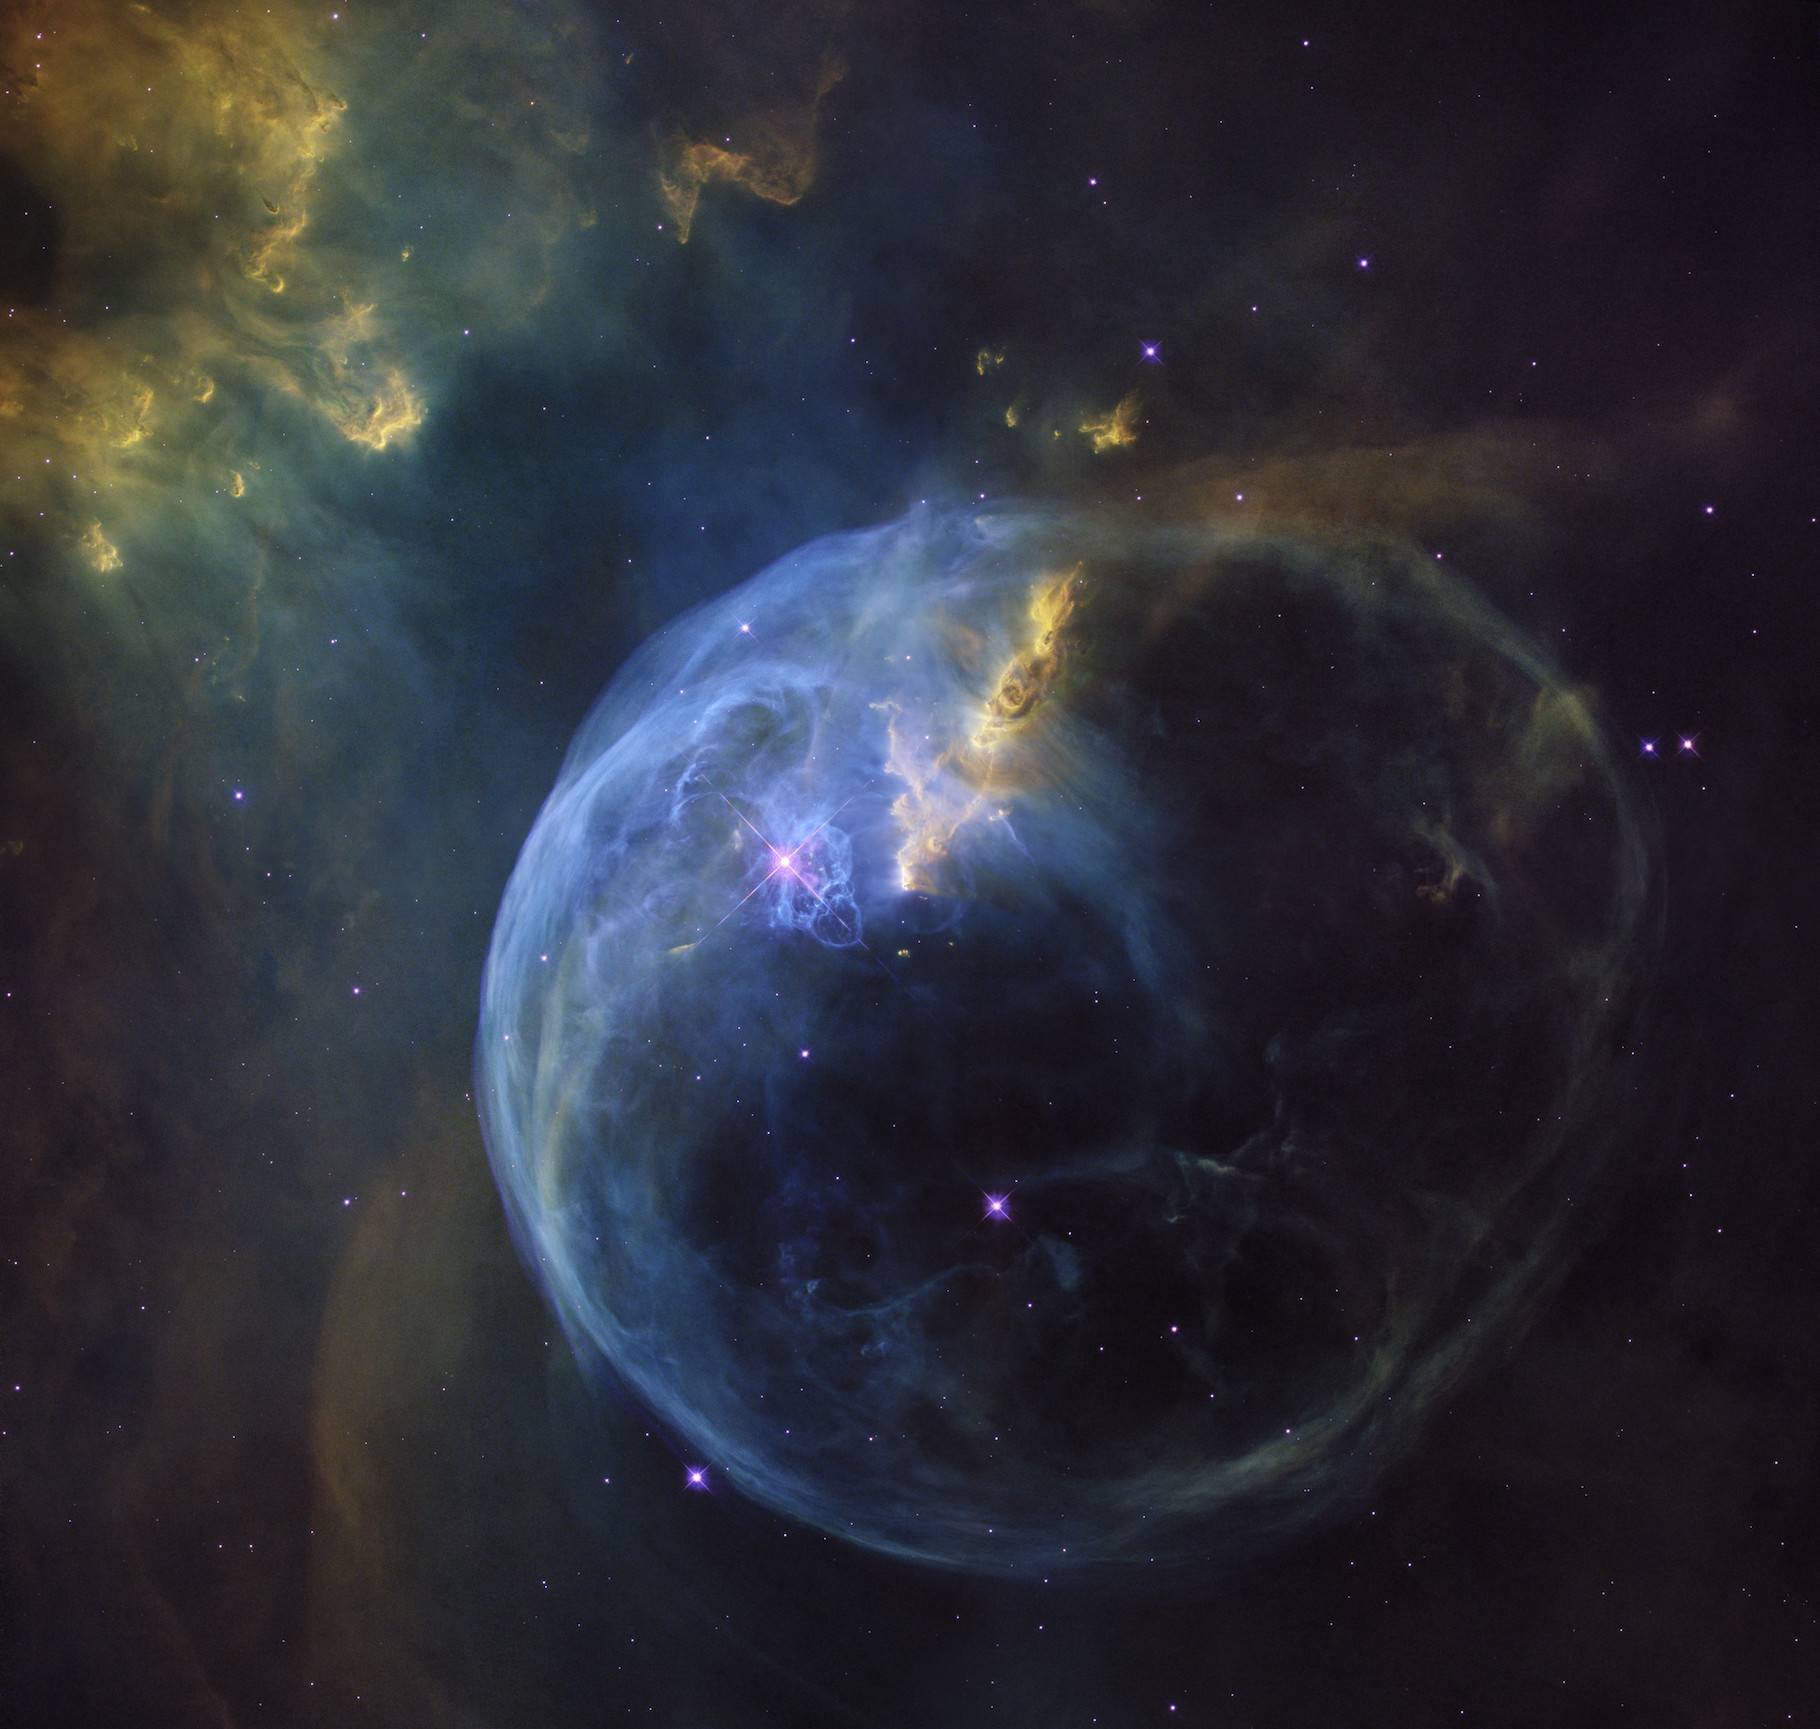 La nébuleuse de la Bulle, dans la constellation de Cassiopée. © Nasa, ESA, Hubble Heritage Team